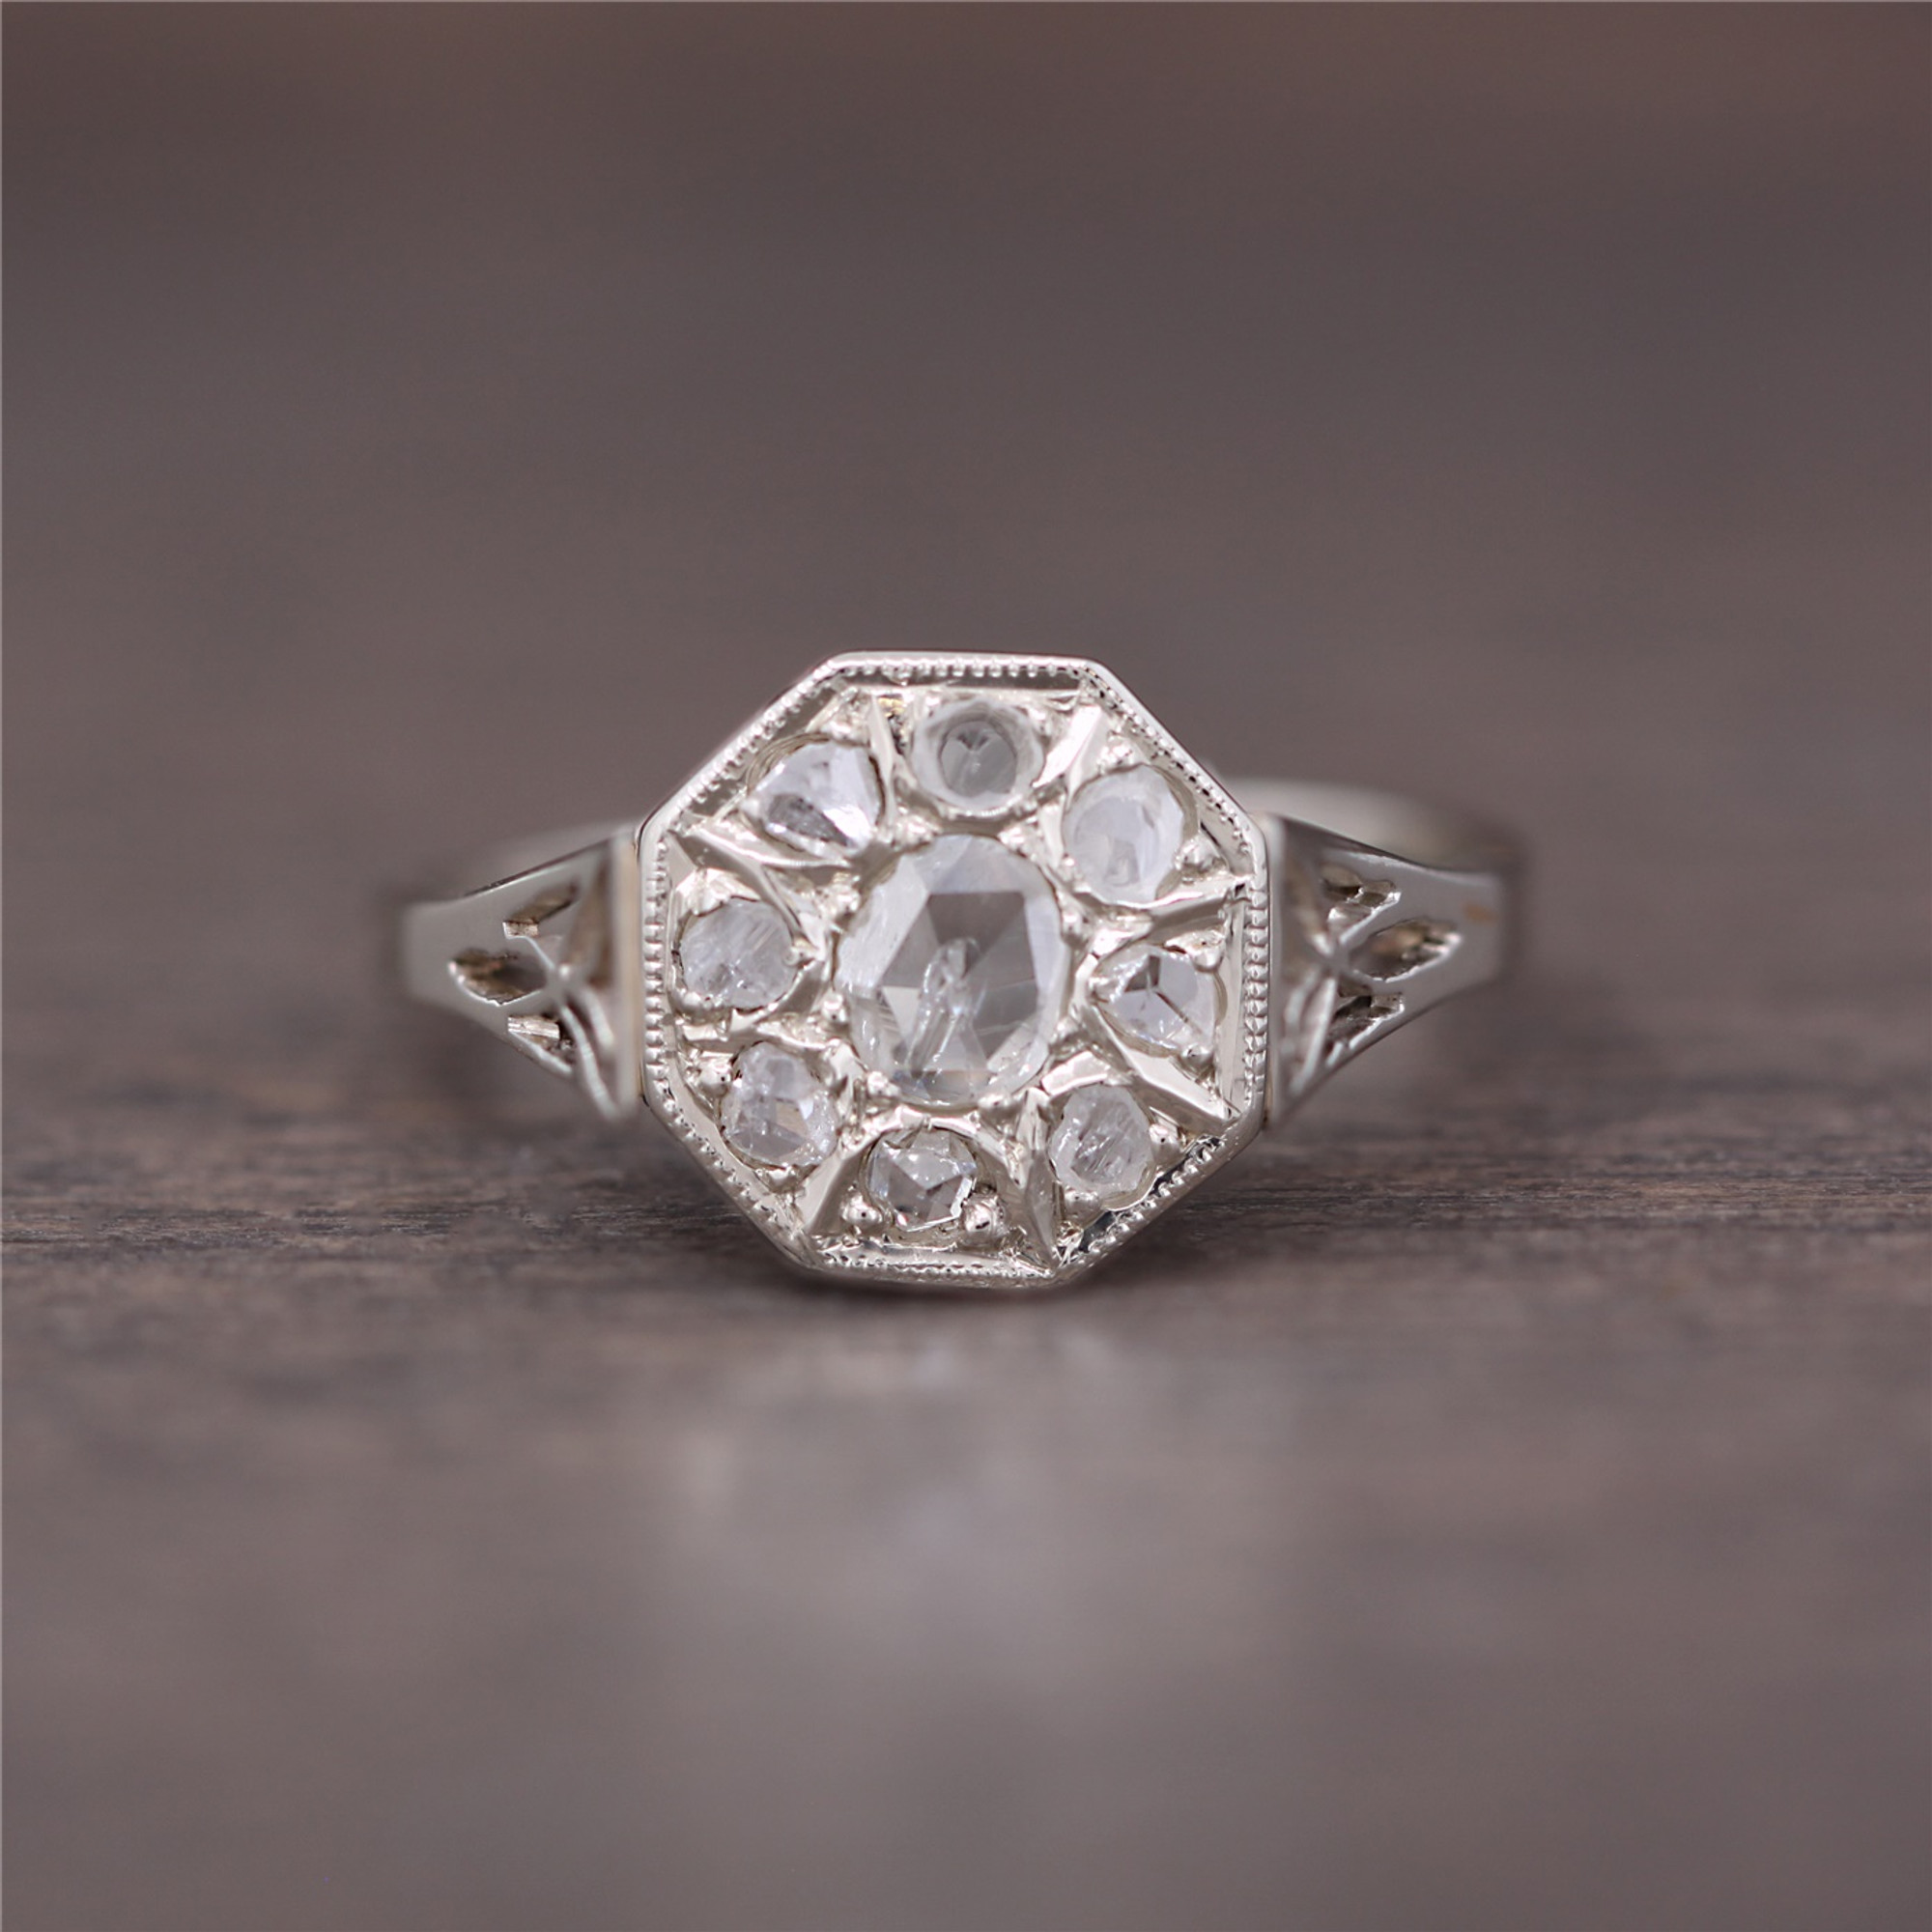 Vintage 14k White Gold & Old Mine Cut 1920s Diamond Ring